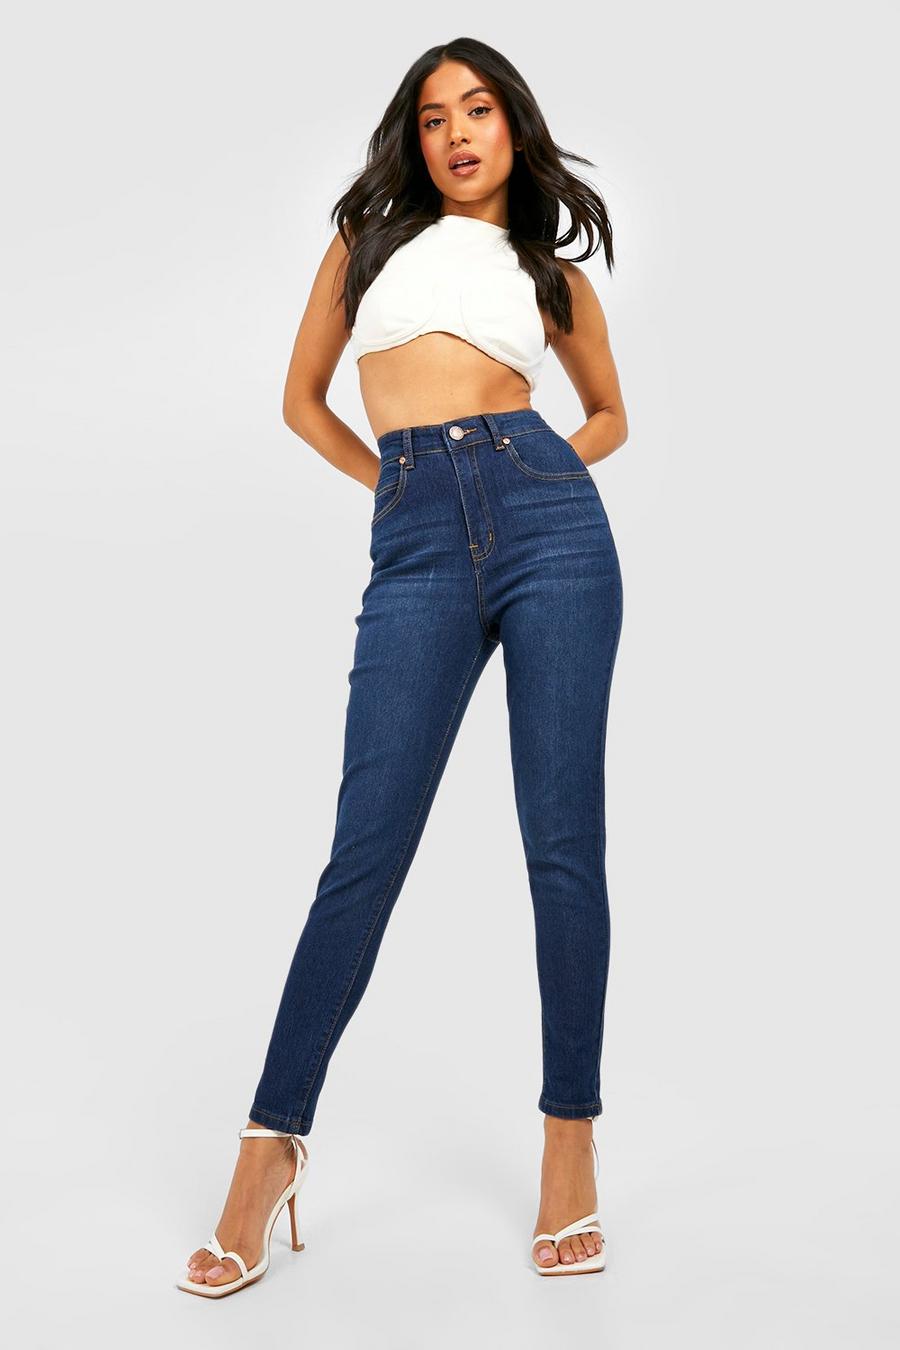 Vbnergoie Womens Skinny Jeans Casual Mid Waist Pants, 51% OFF